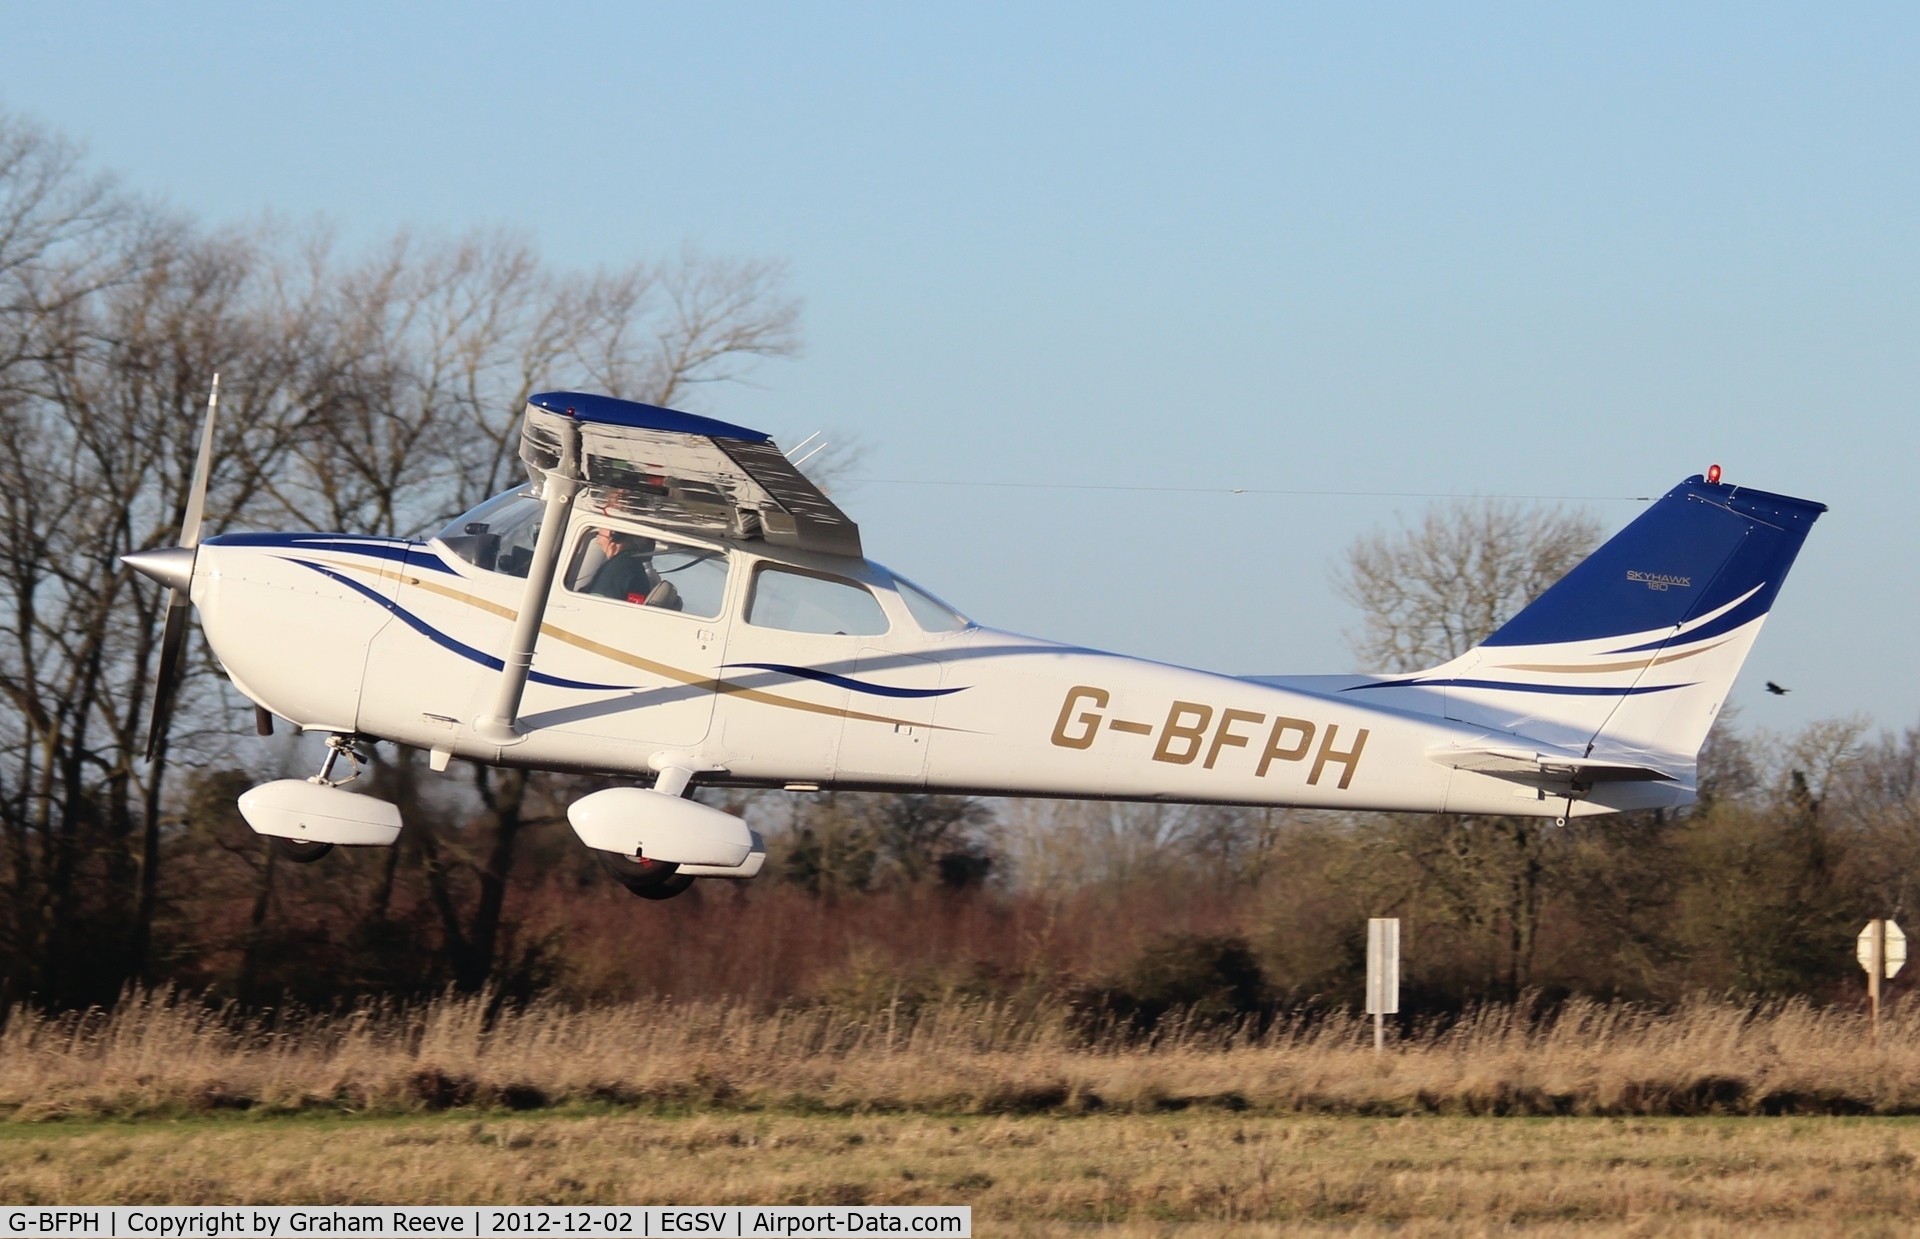 G-BFPH, 1971 Reims F172K Skyhawk C/N 0802, Just taken off.